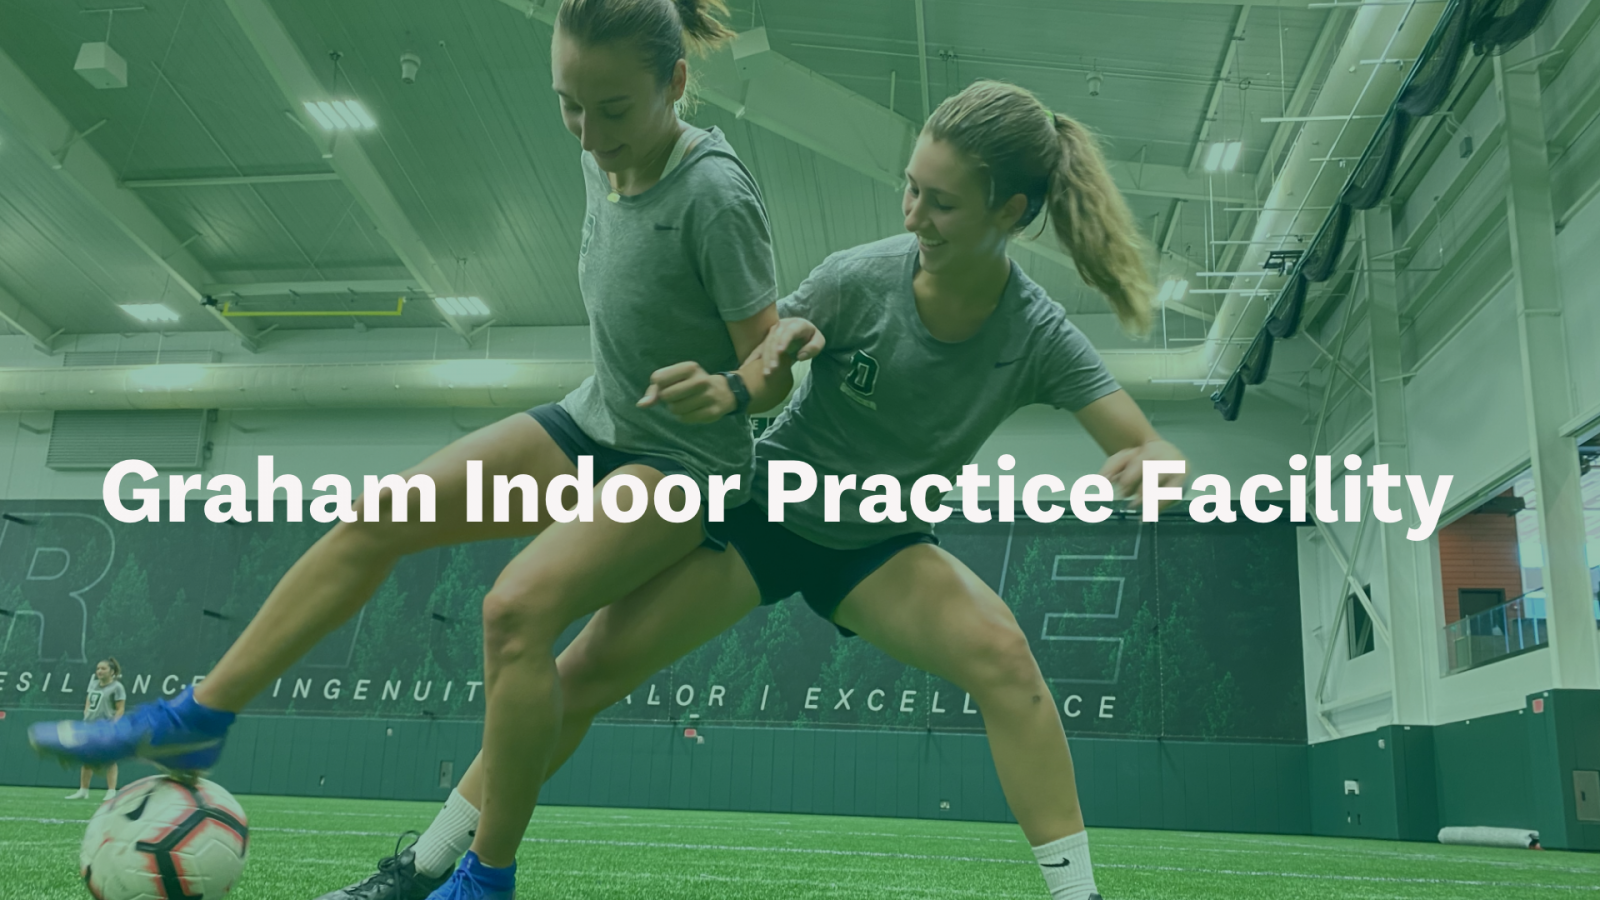 Graham indoor practice facility